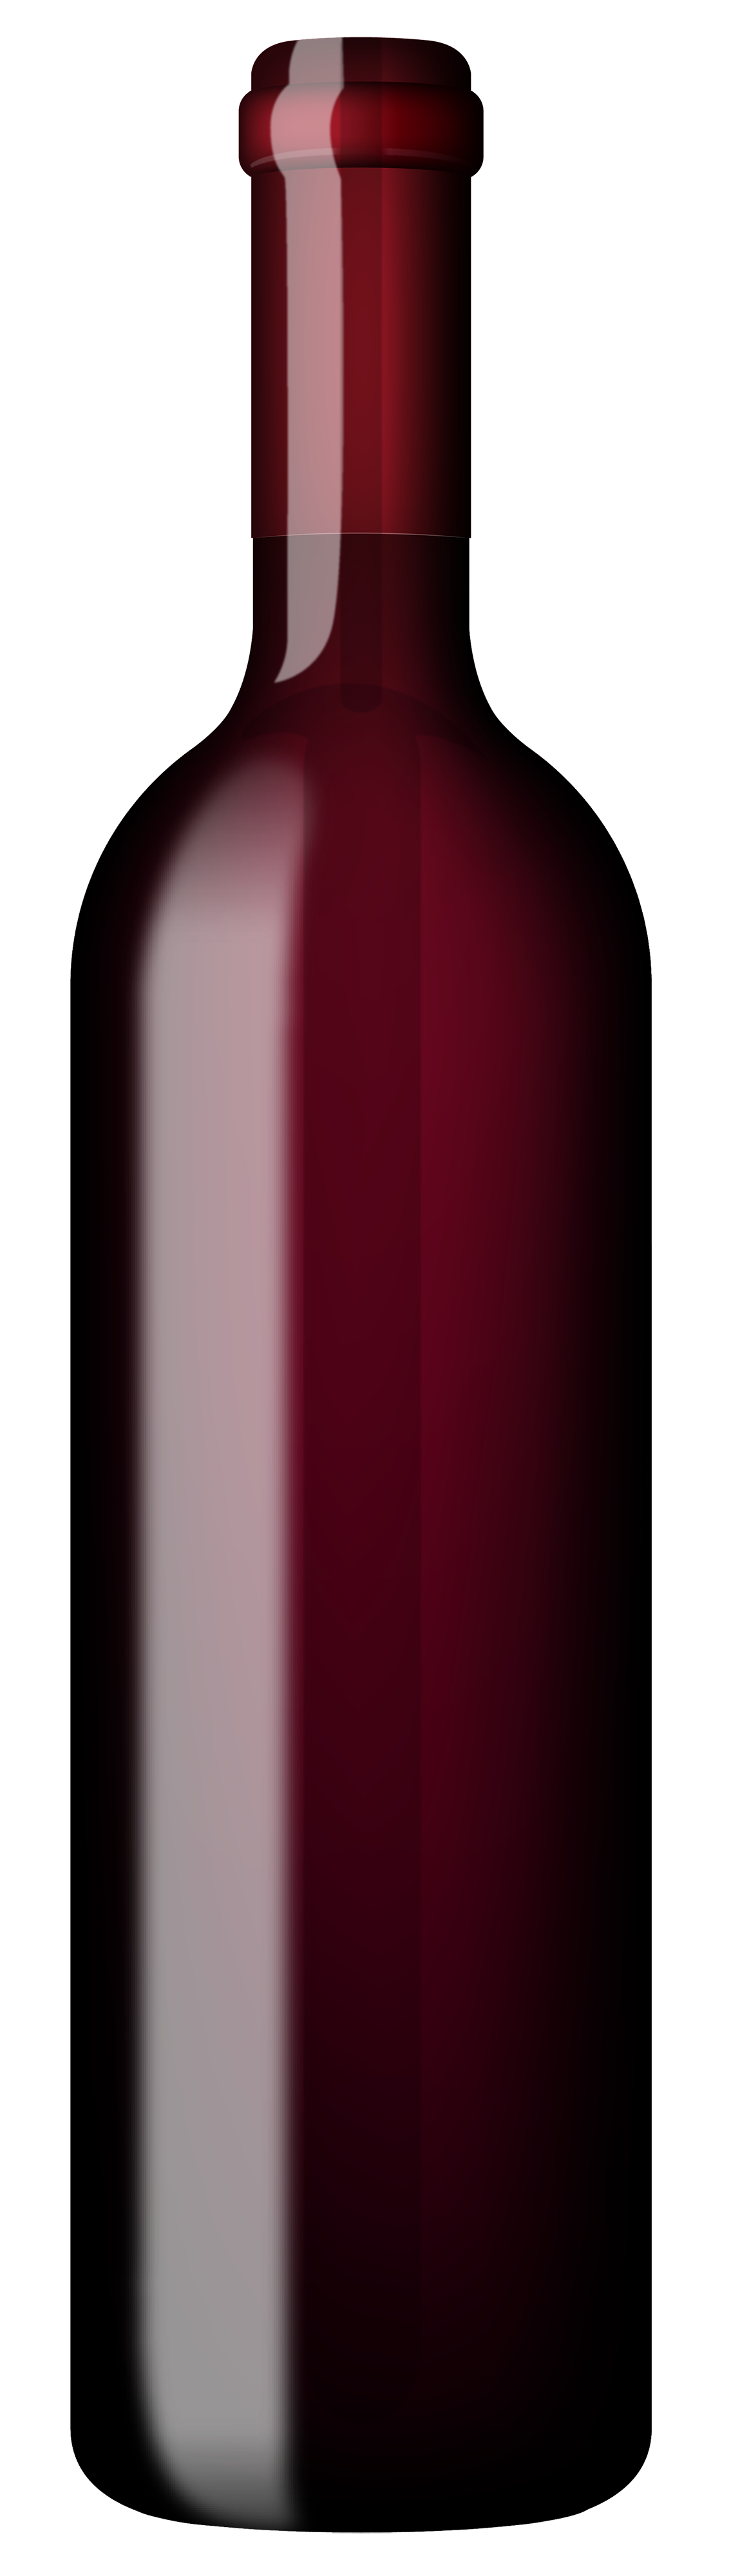 Wine bottle download wine clip art free clipart of wine glasses